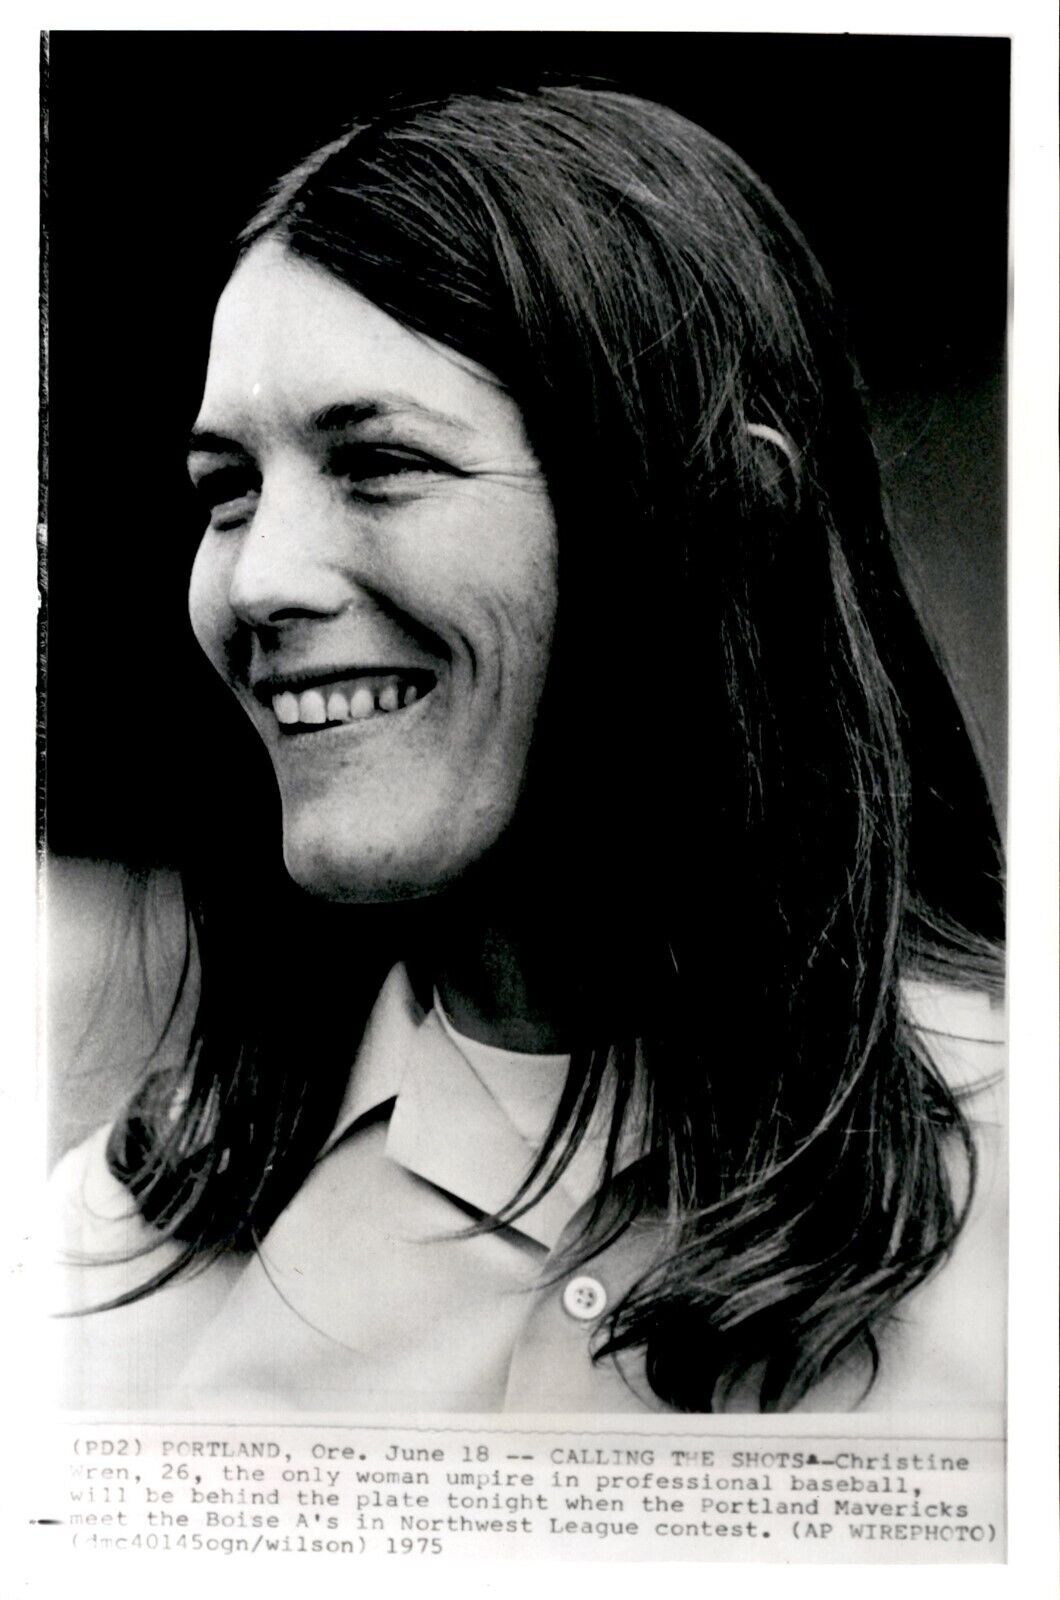 LG54 1975 AP Wire Photo CHRISTINE WREN CALLING THE SHOTS ONLY WOMAN UMP BASEBALL